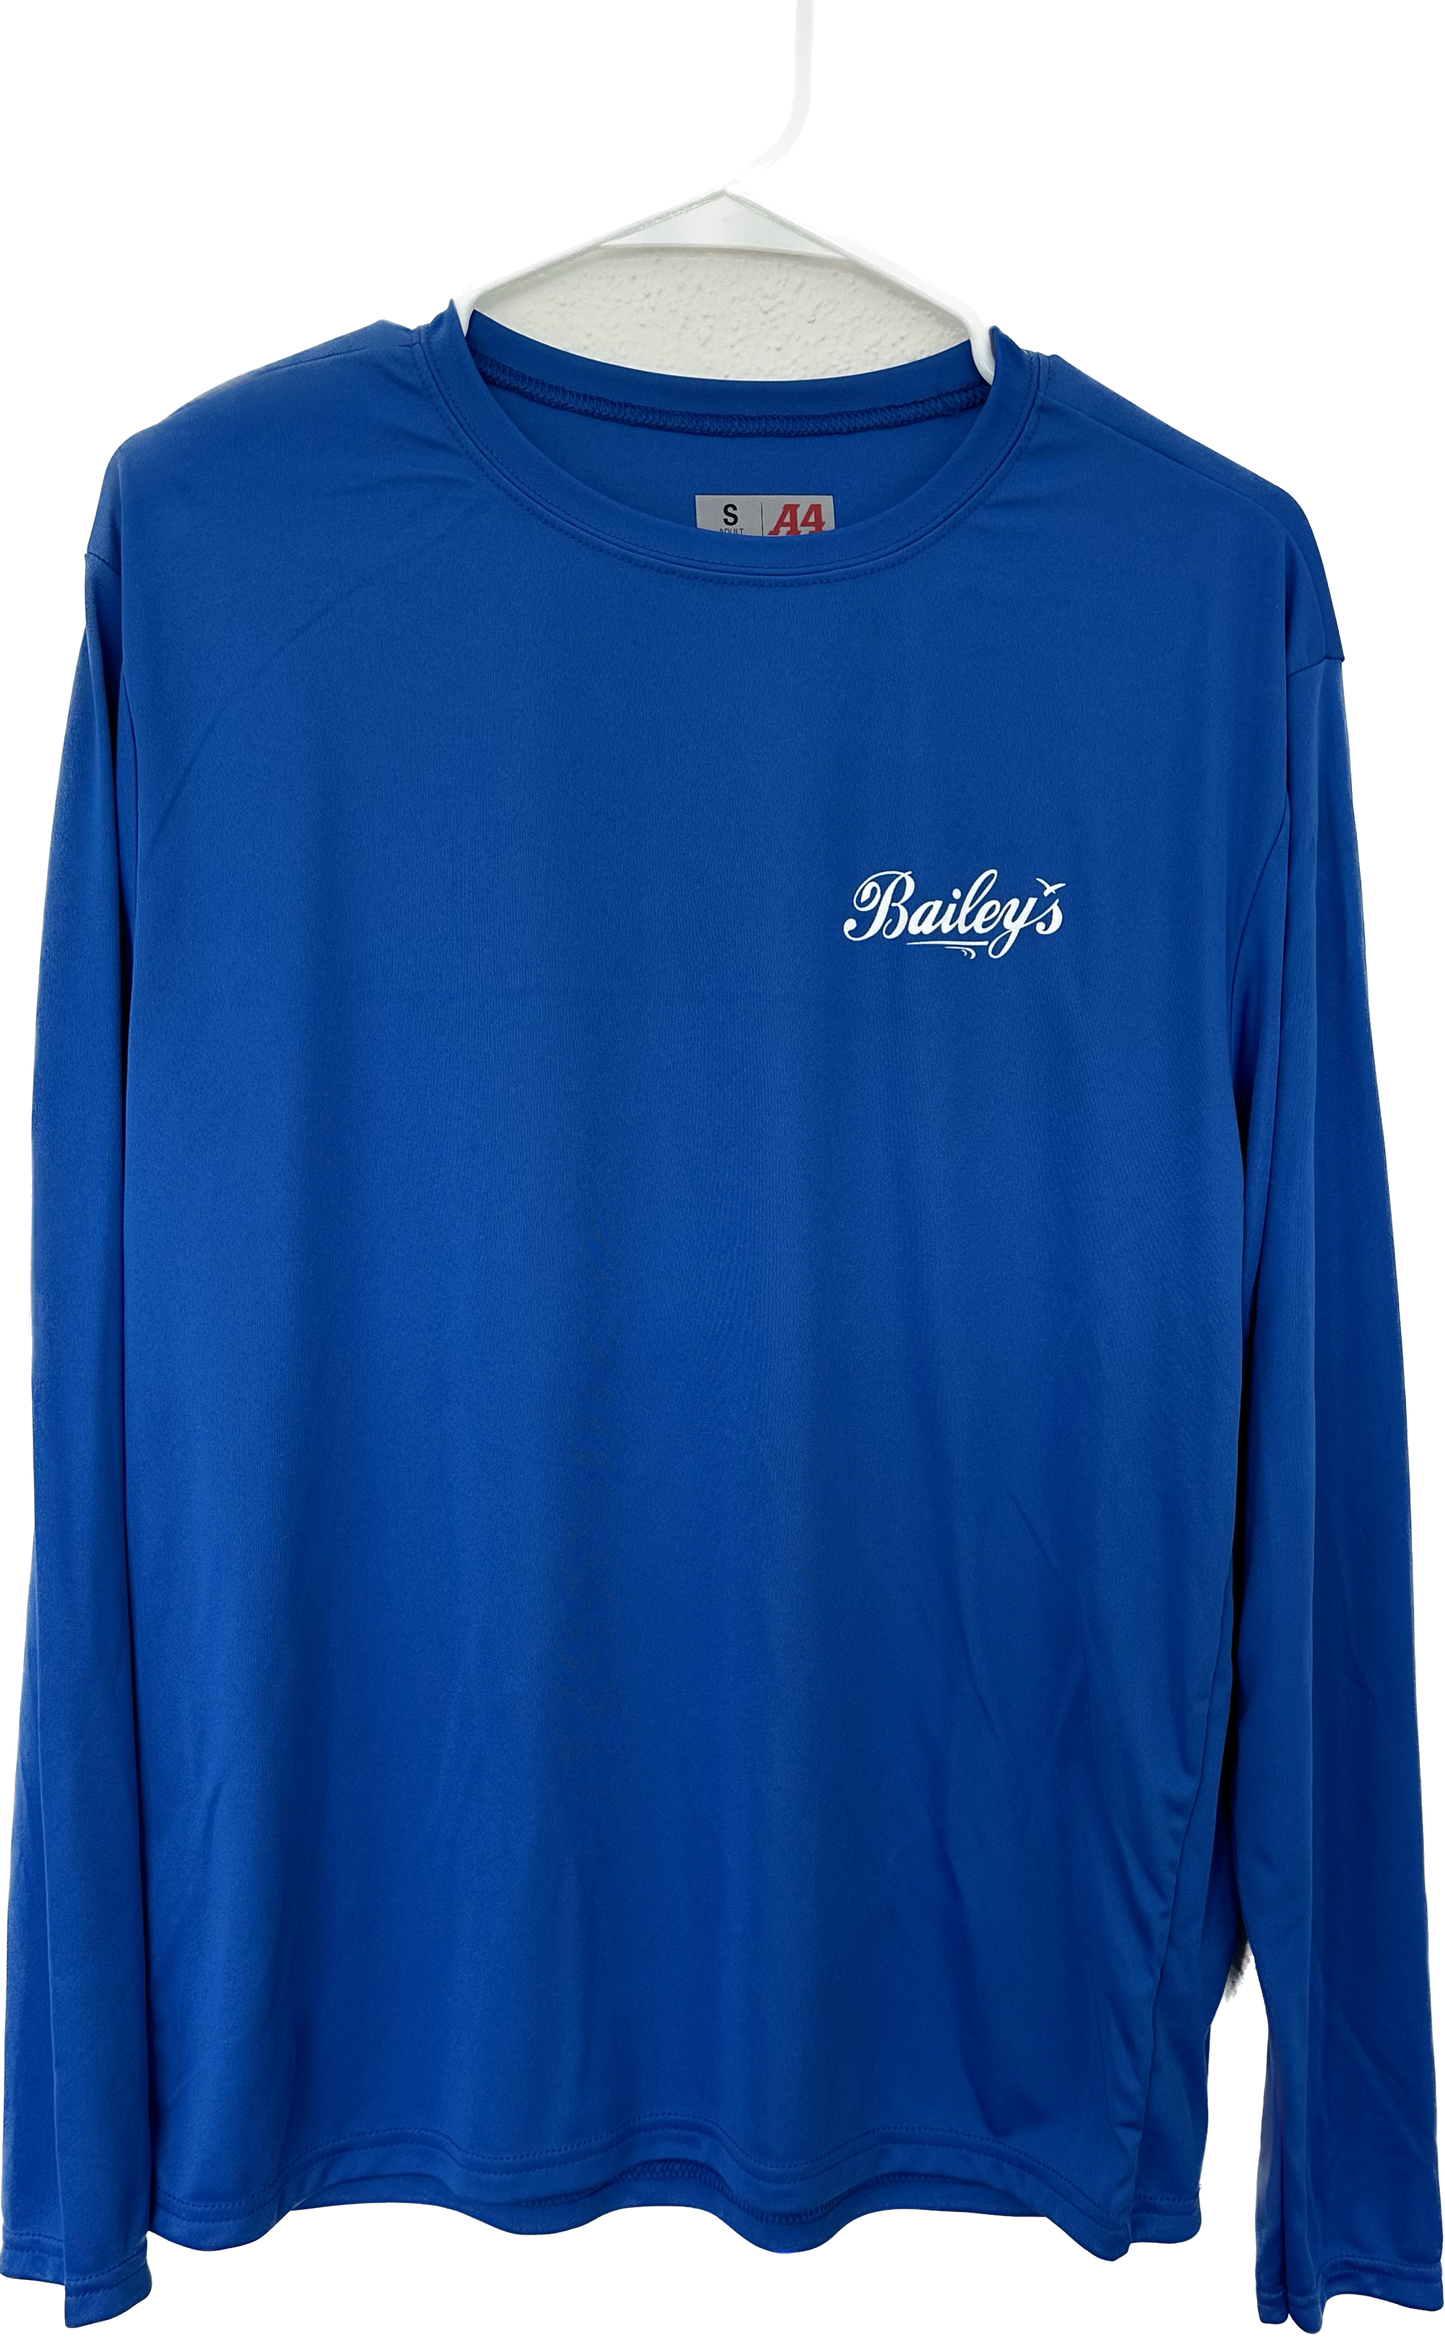 Bailey’s Lighthouse Paper Bag Long Sleeve Performance Shirt